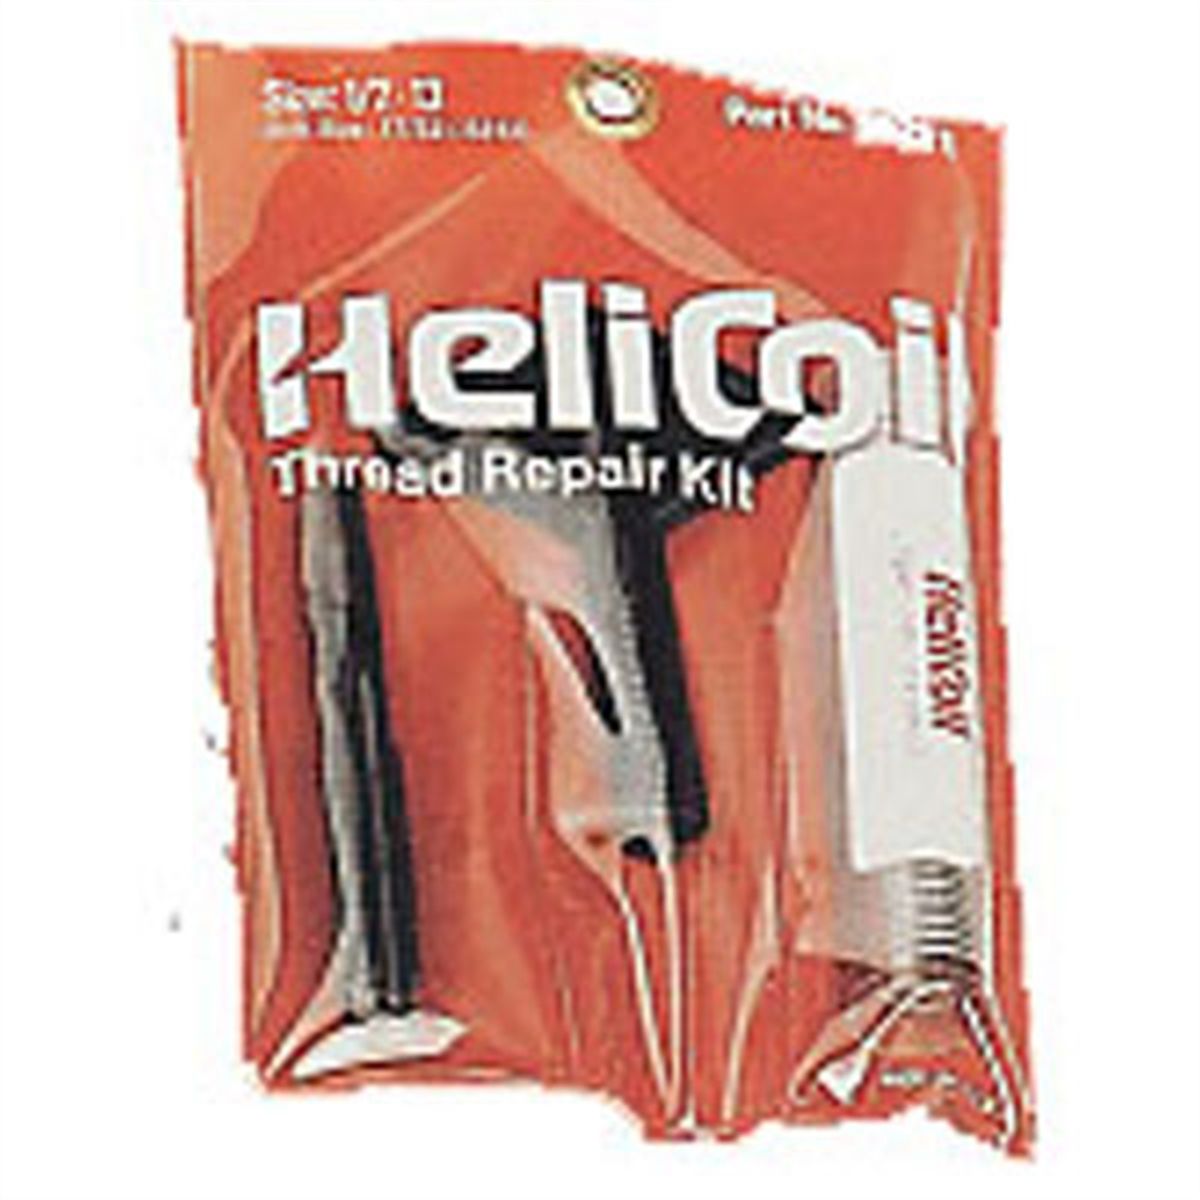 Heli-Coil Standard Thread Repair Kit - Coarse Thread - 3/4-10 x 1.125  long - 25/32 drill bit not included 5521-12 - Advance Auto Parts